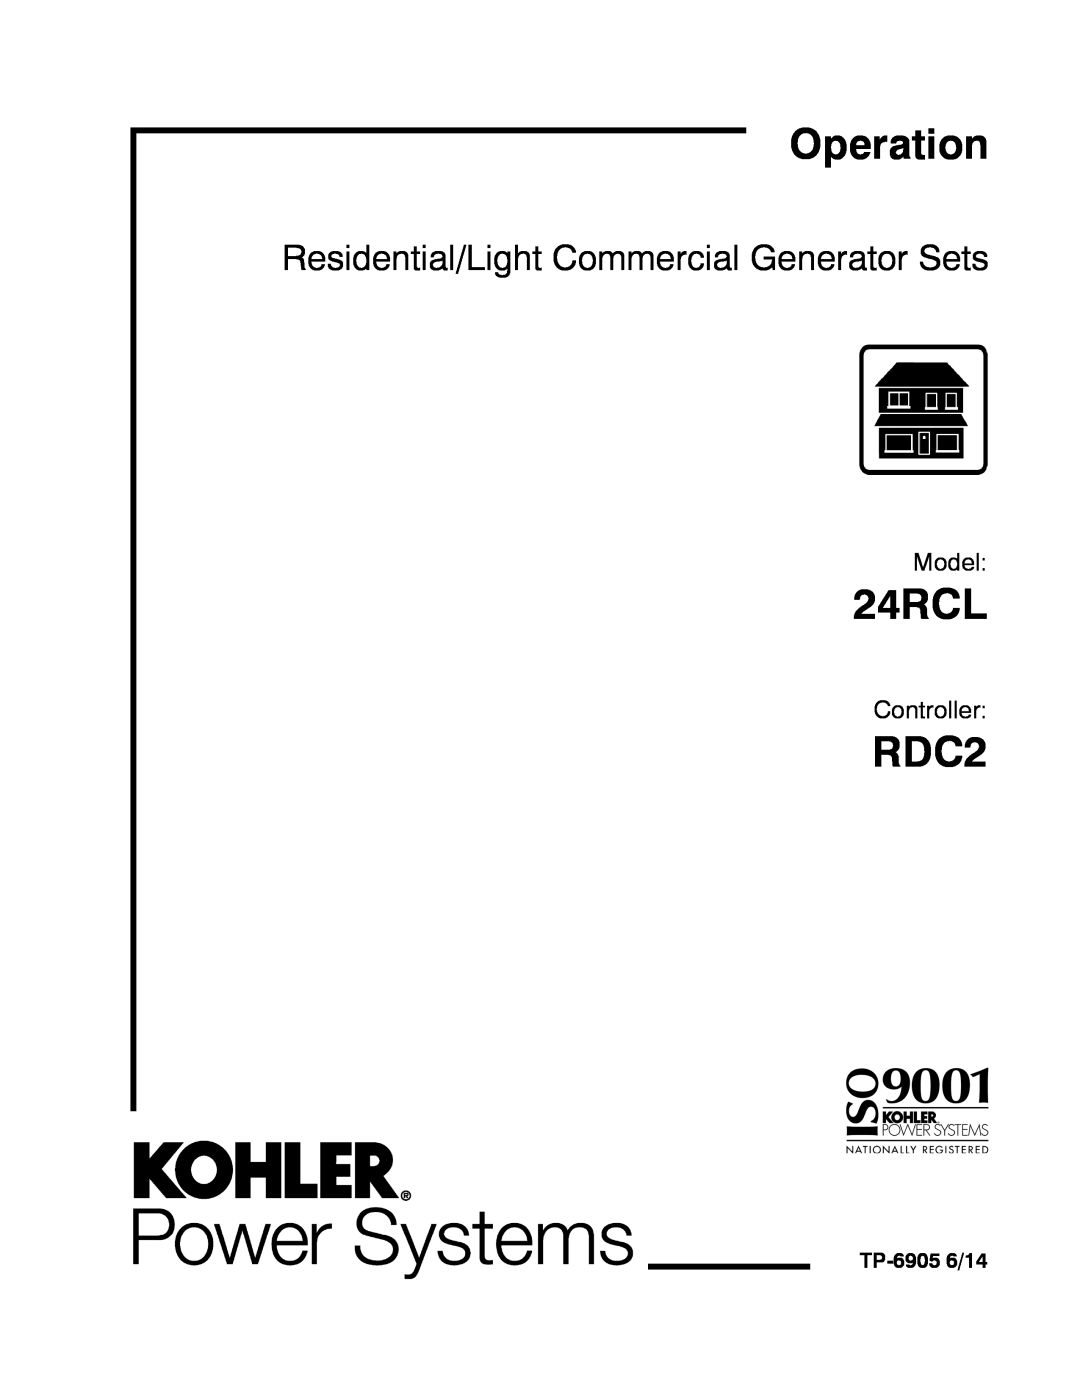 Kohler 24RCL manual TP-69056/14, Operation, RDC2, Residential/Light Commercial Generator Sets, Model, Controller 